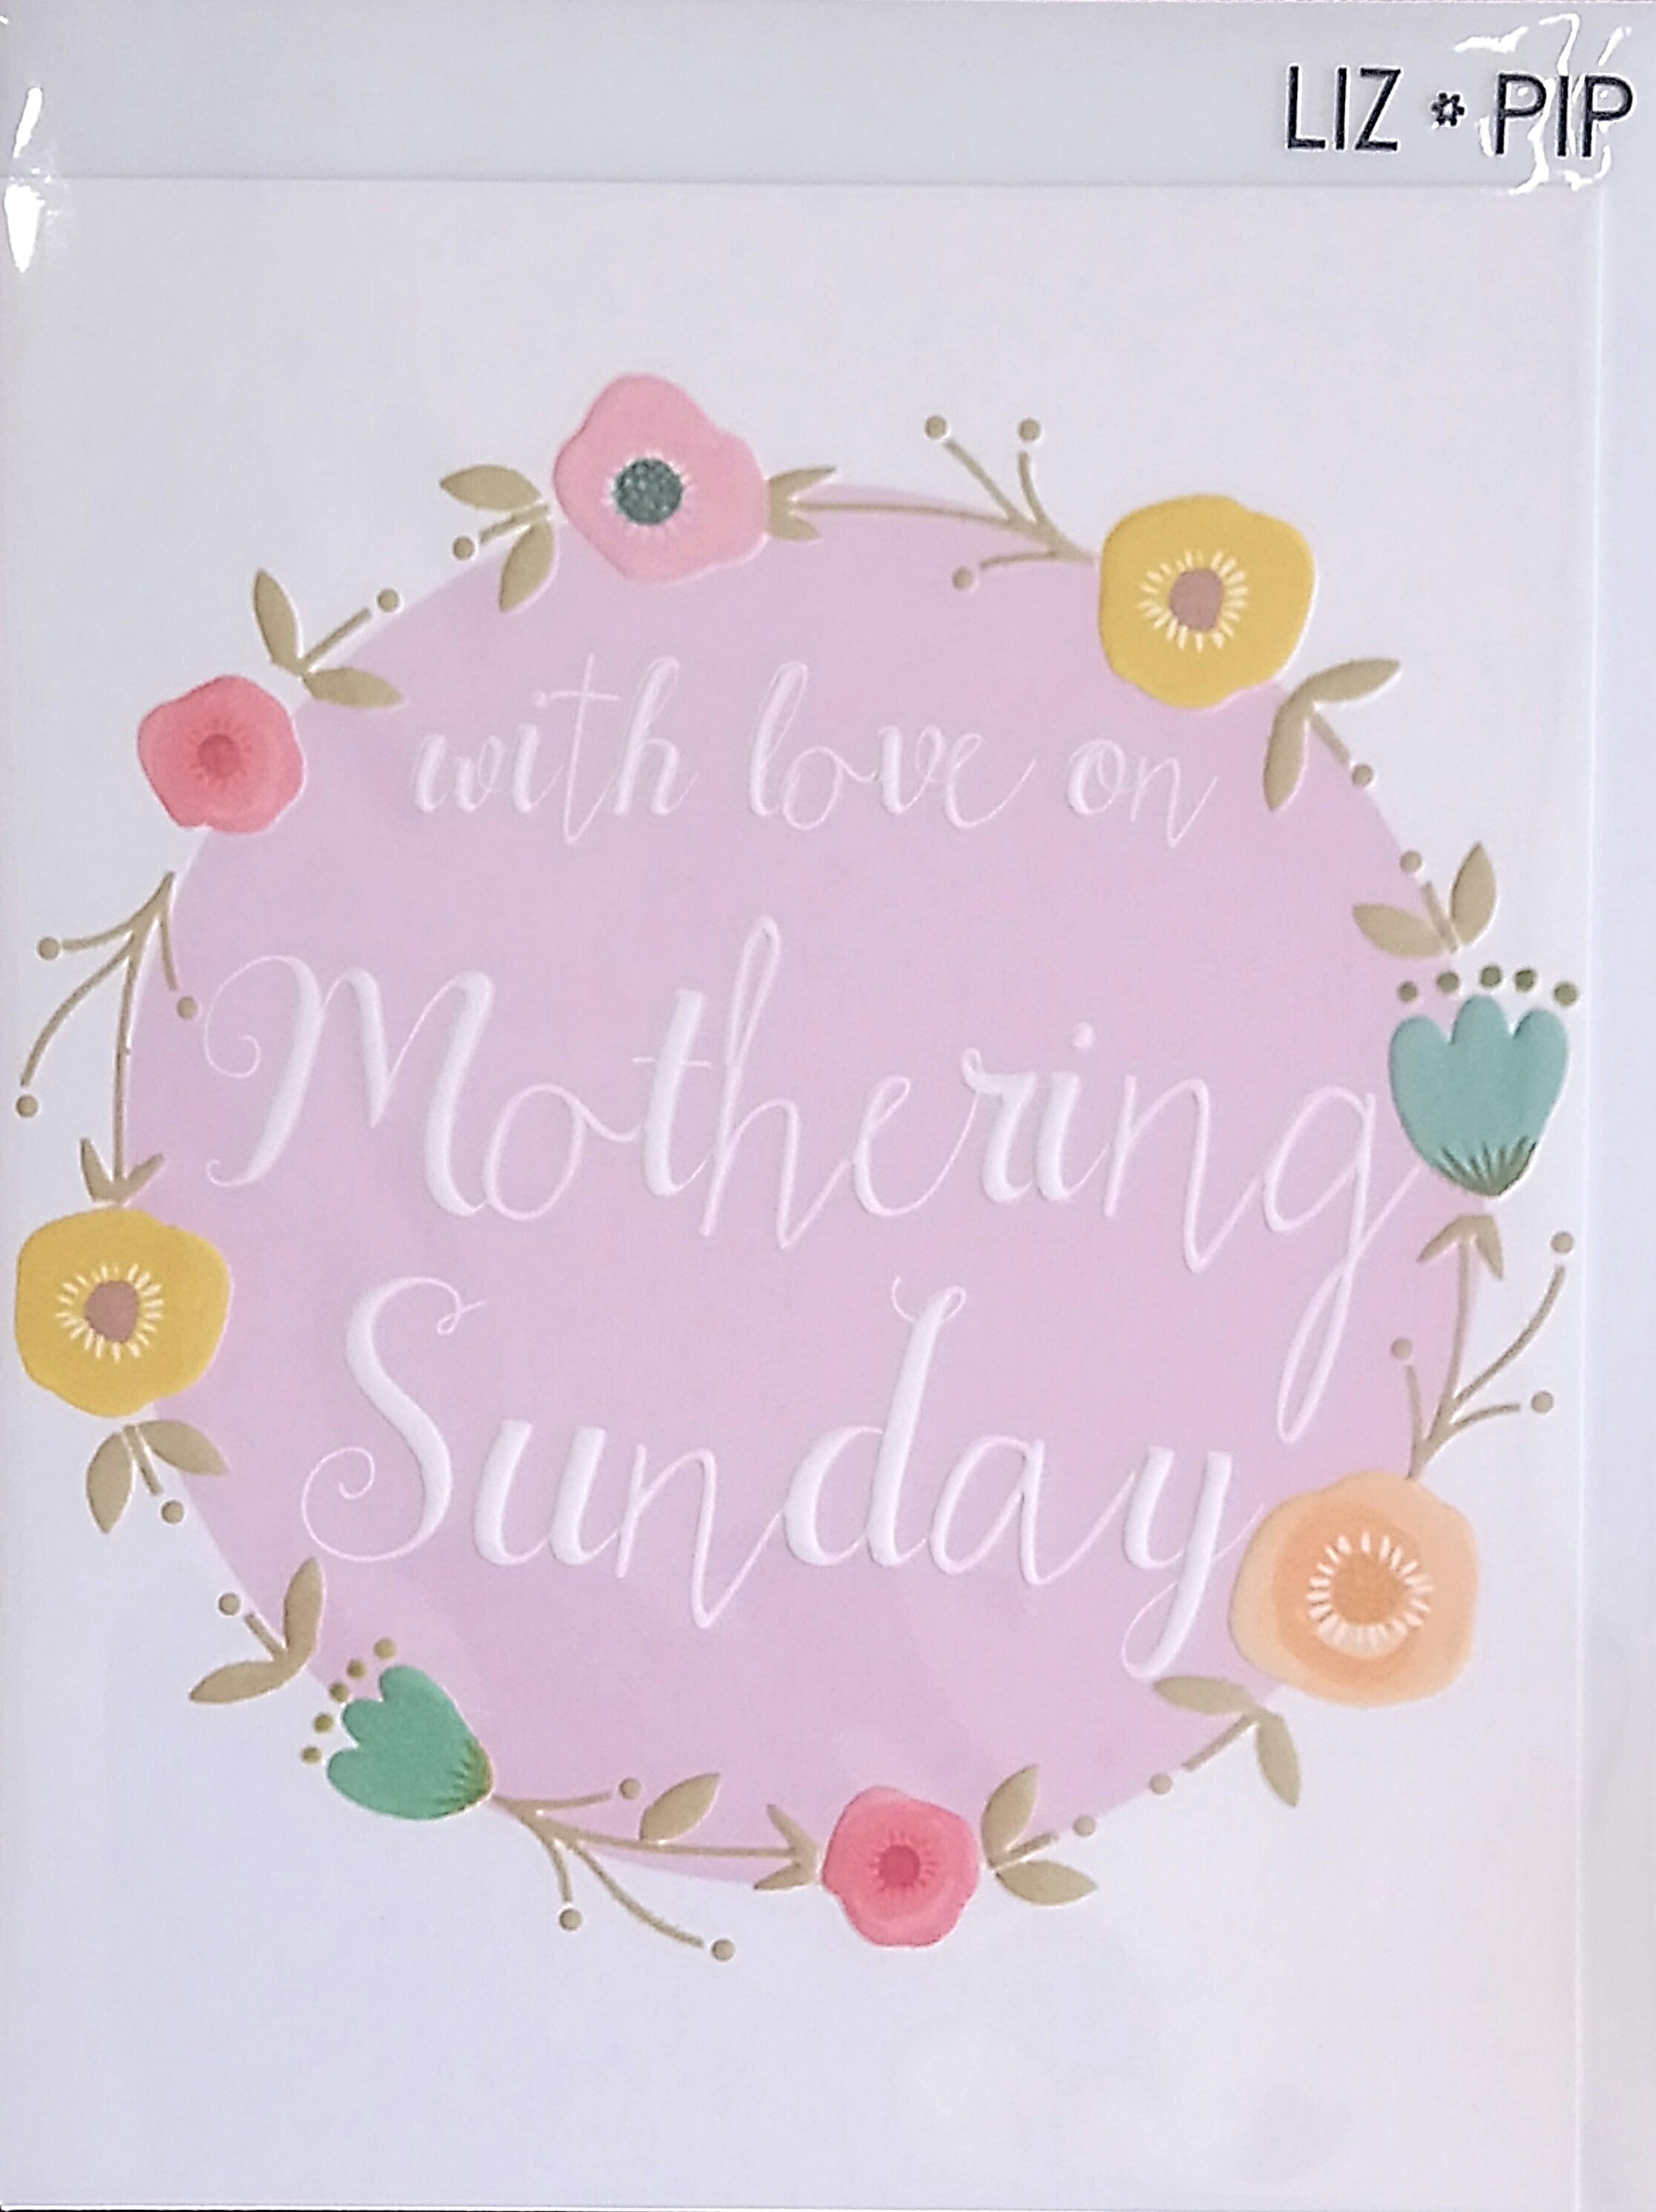 SS47 Mothering Sunday Card designed by Liz & Pip